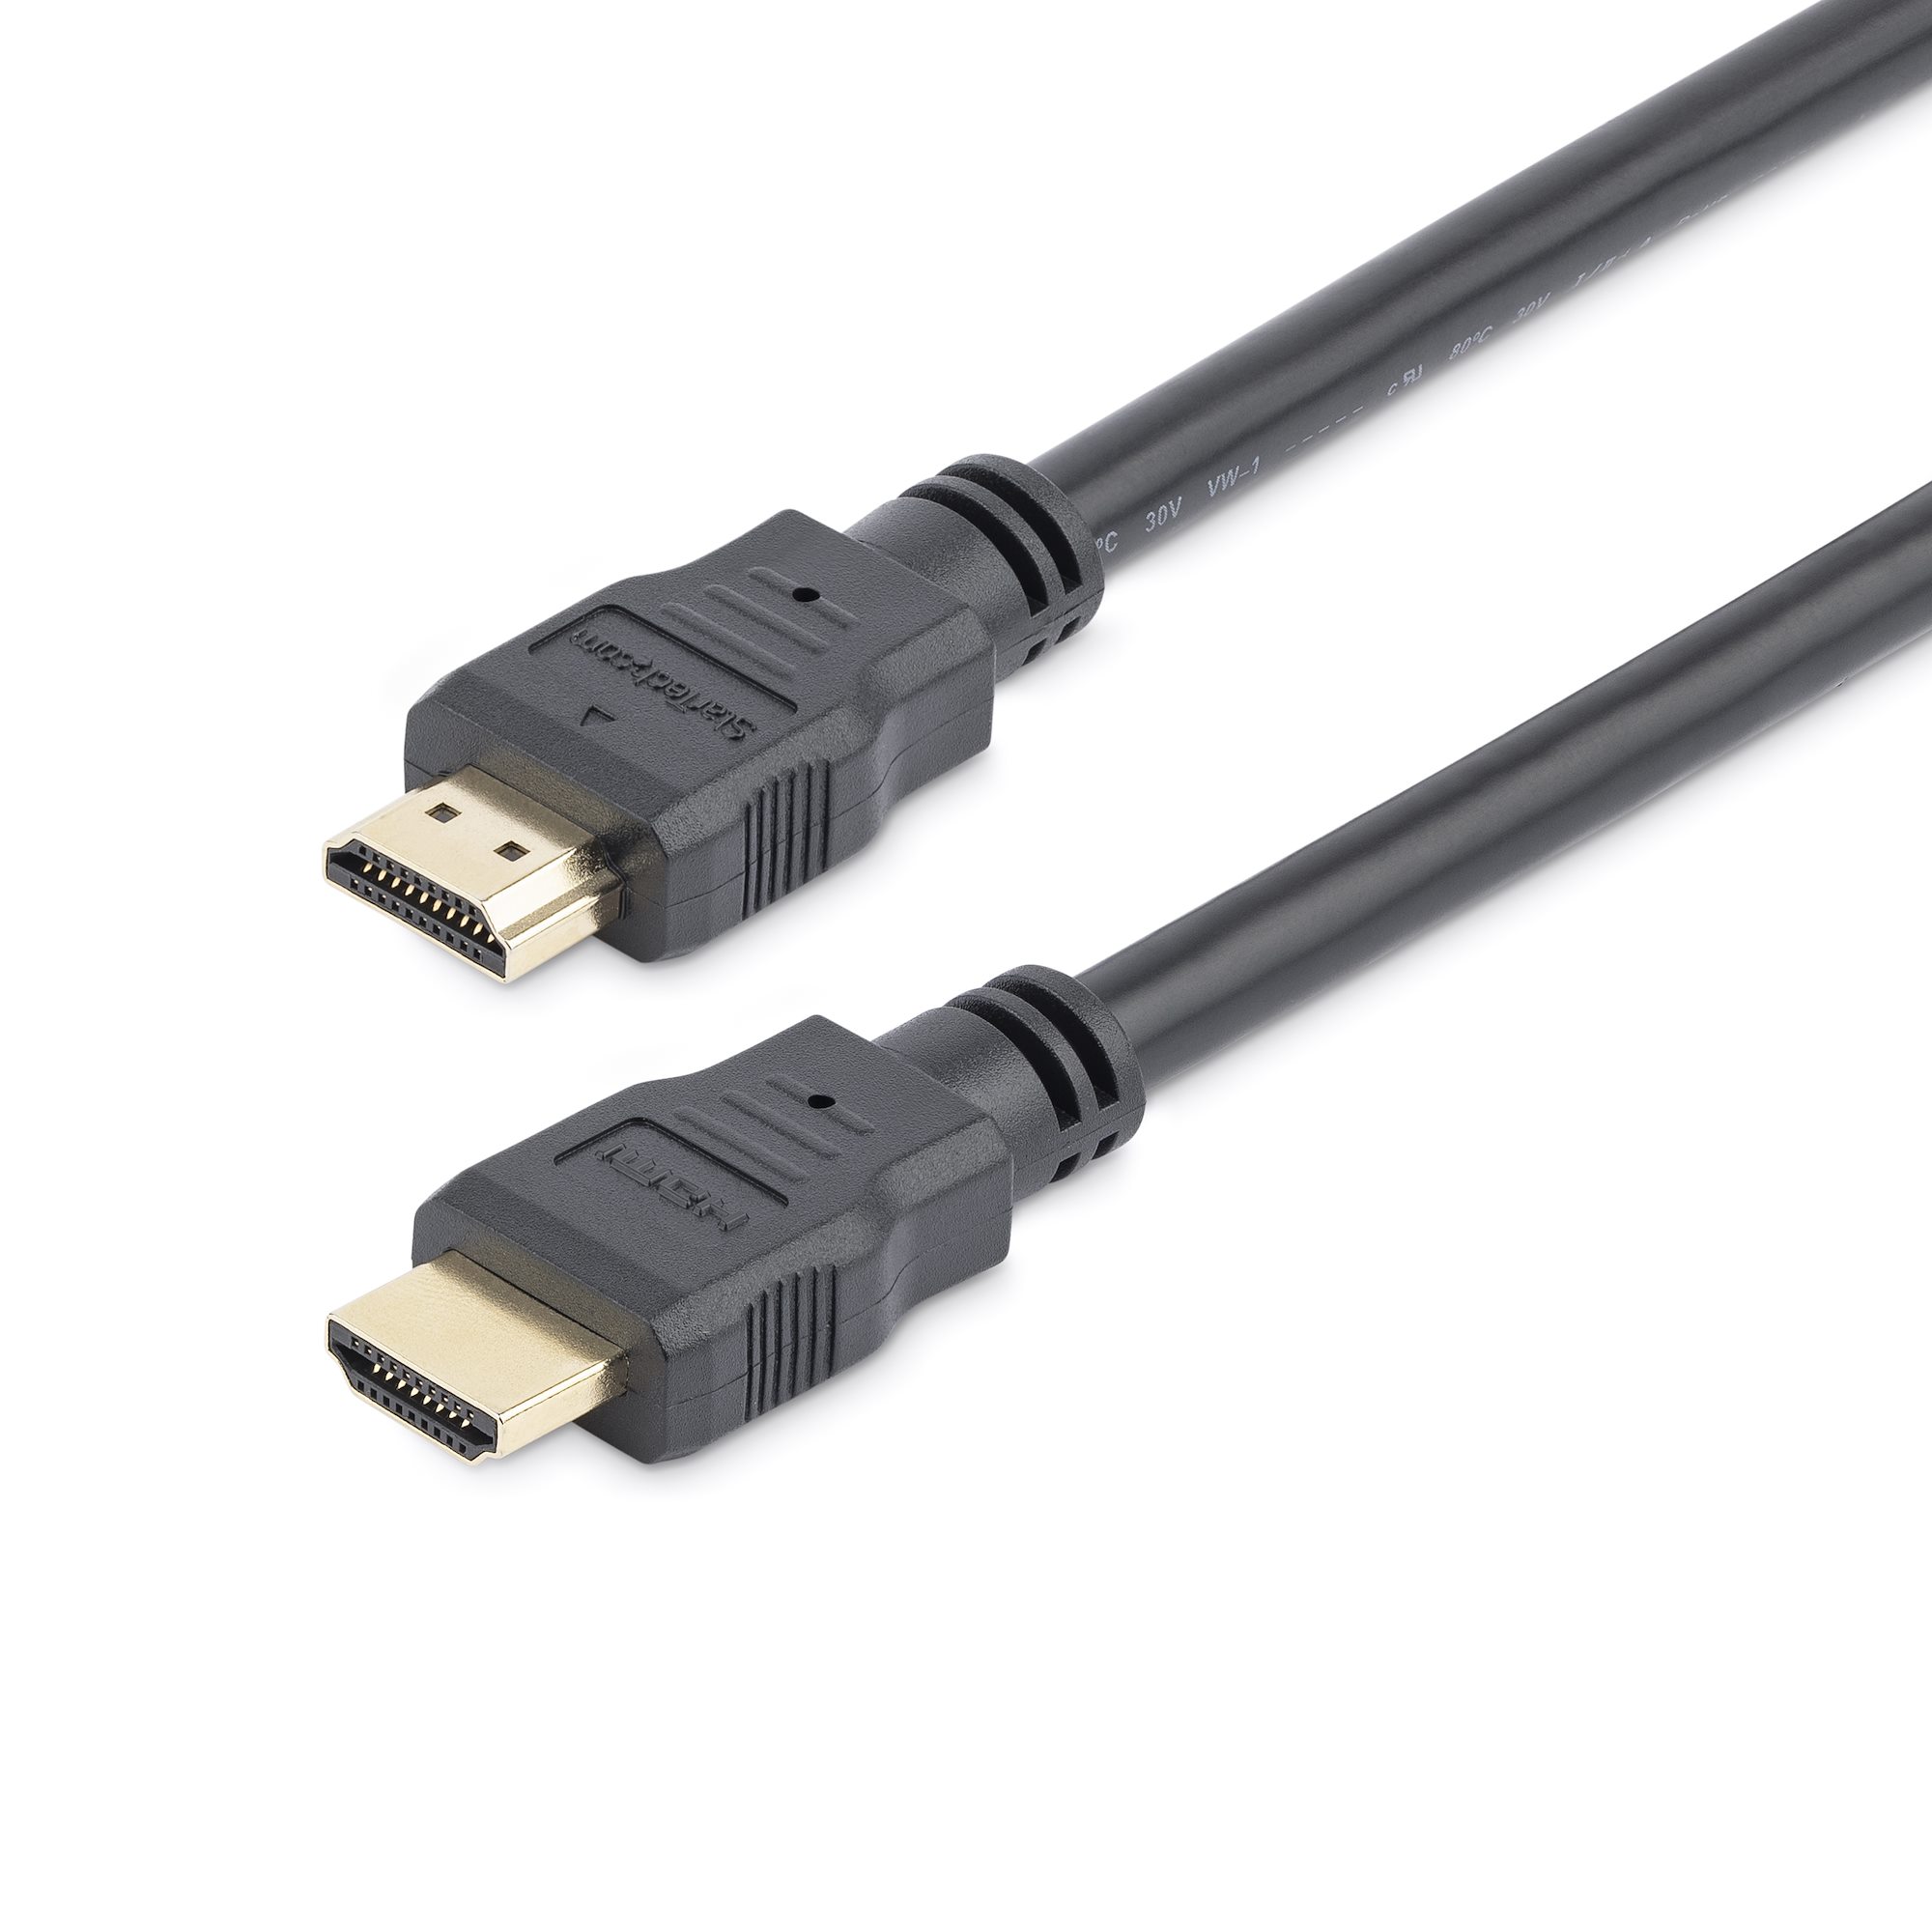 Fordeling hvor som helst mundstykke 12ft 4K High Speed HDMI Cable - HDMI 1.4 - HDMI® Cables & HDMI Adapters |  StarTech.com